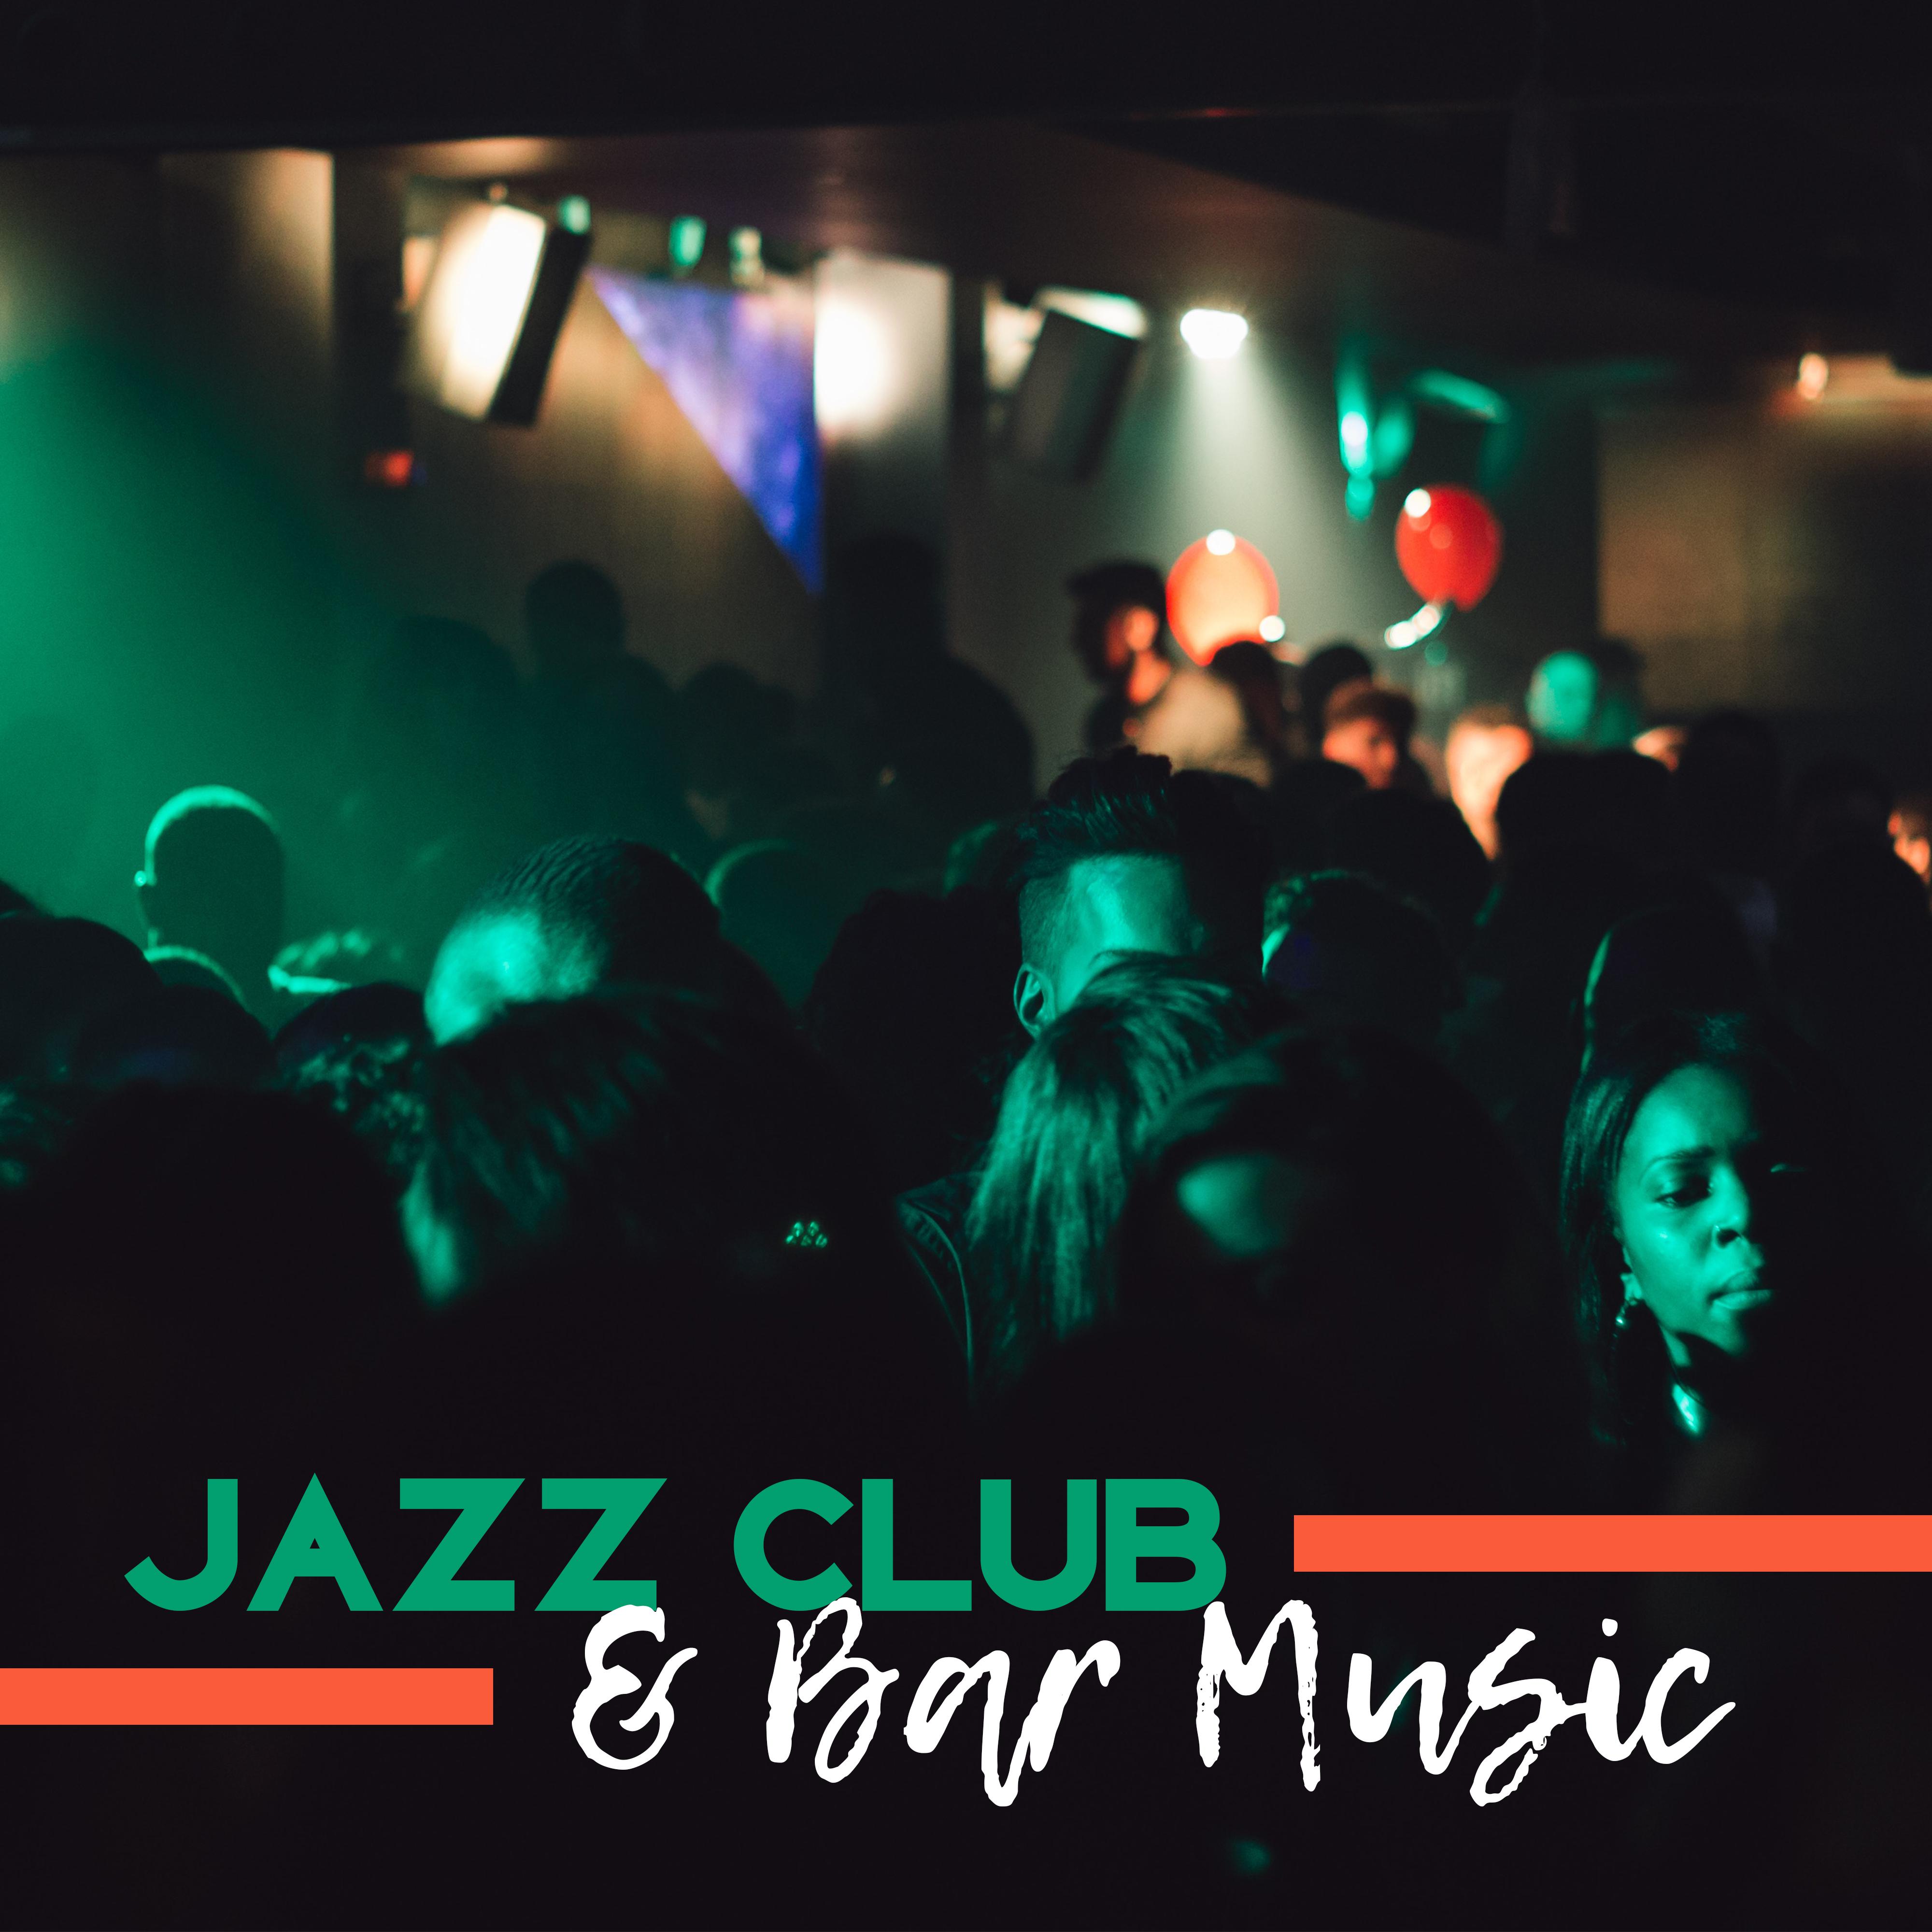 Jazz Club  Bar Music  New Jazz Lounge, Ambient Music 2017, Instrumental Jazz, Easy Listening